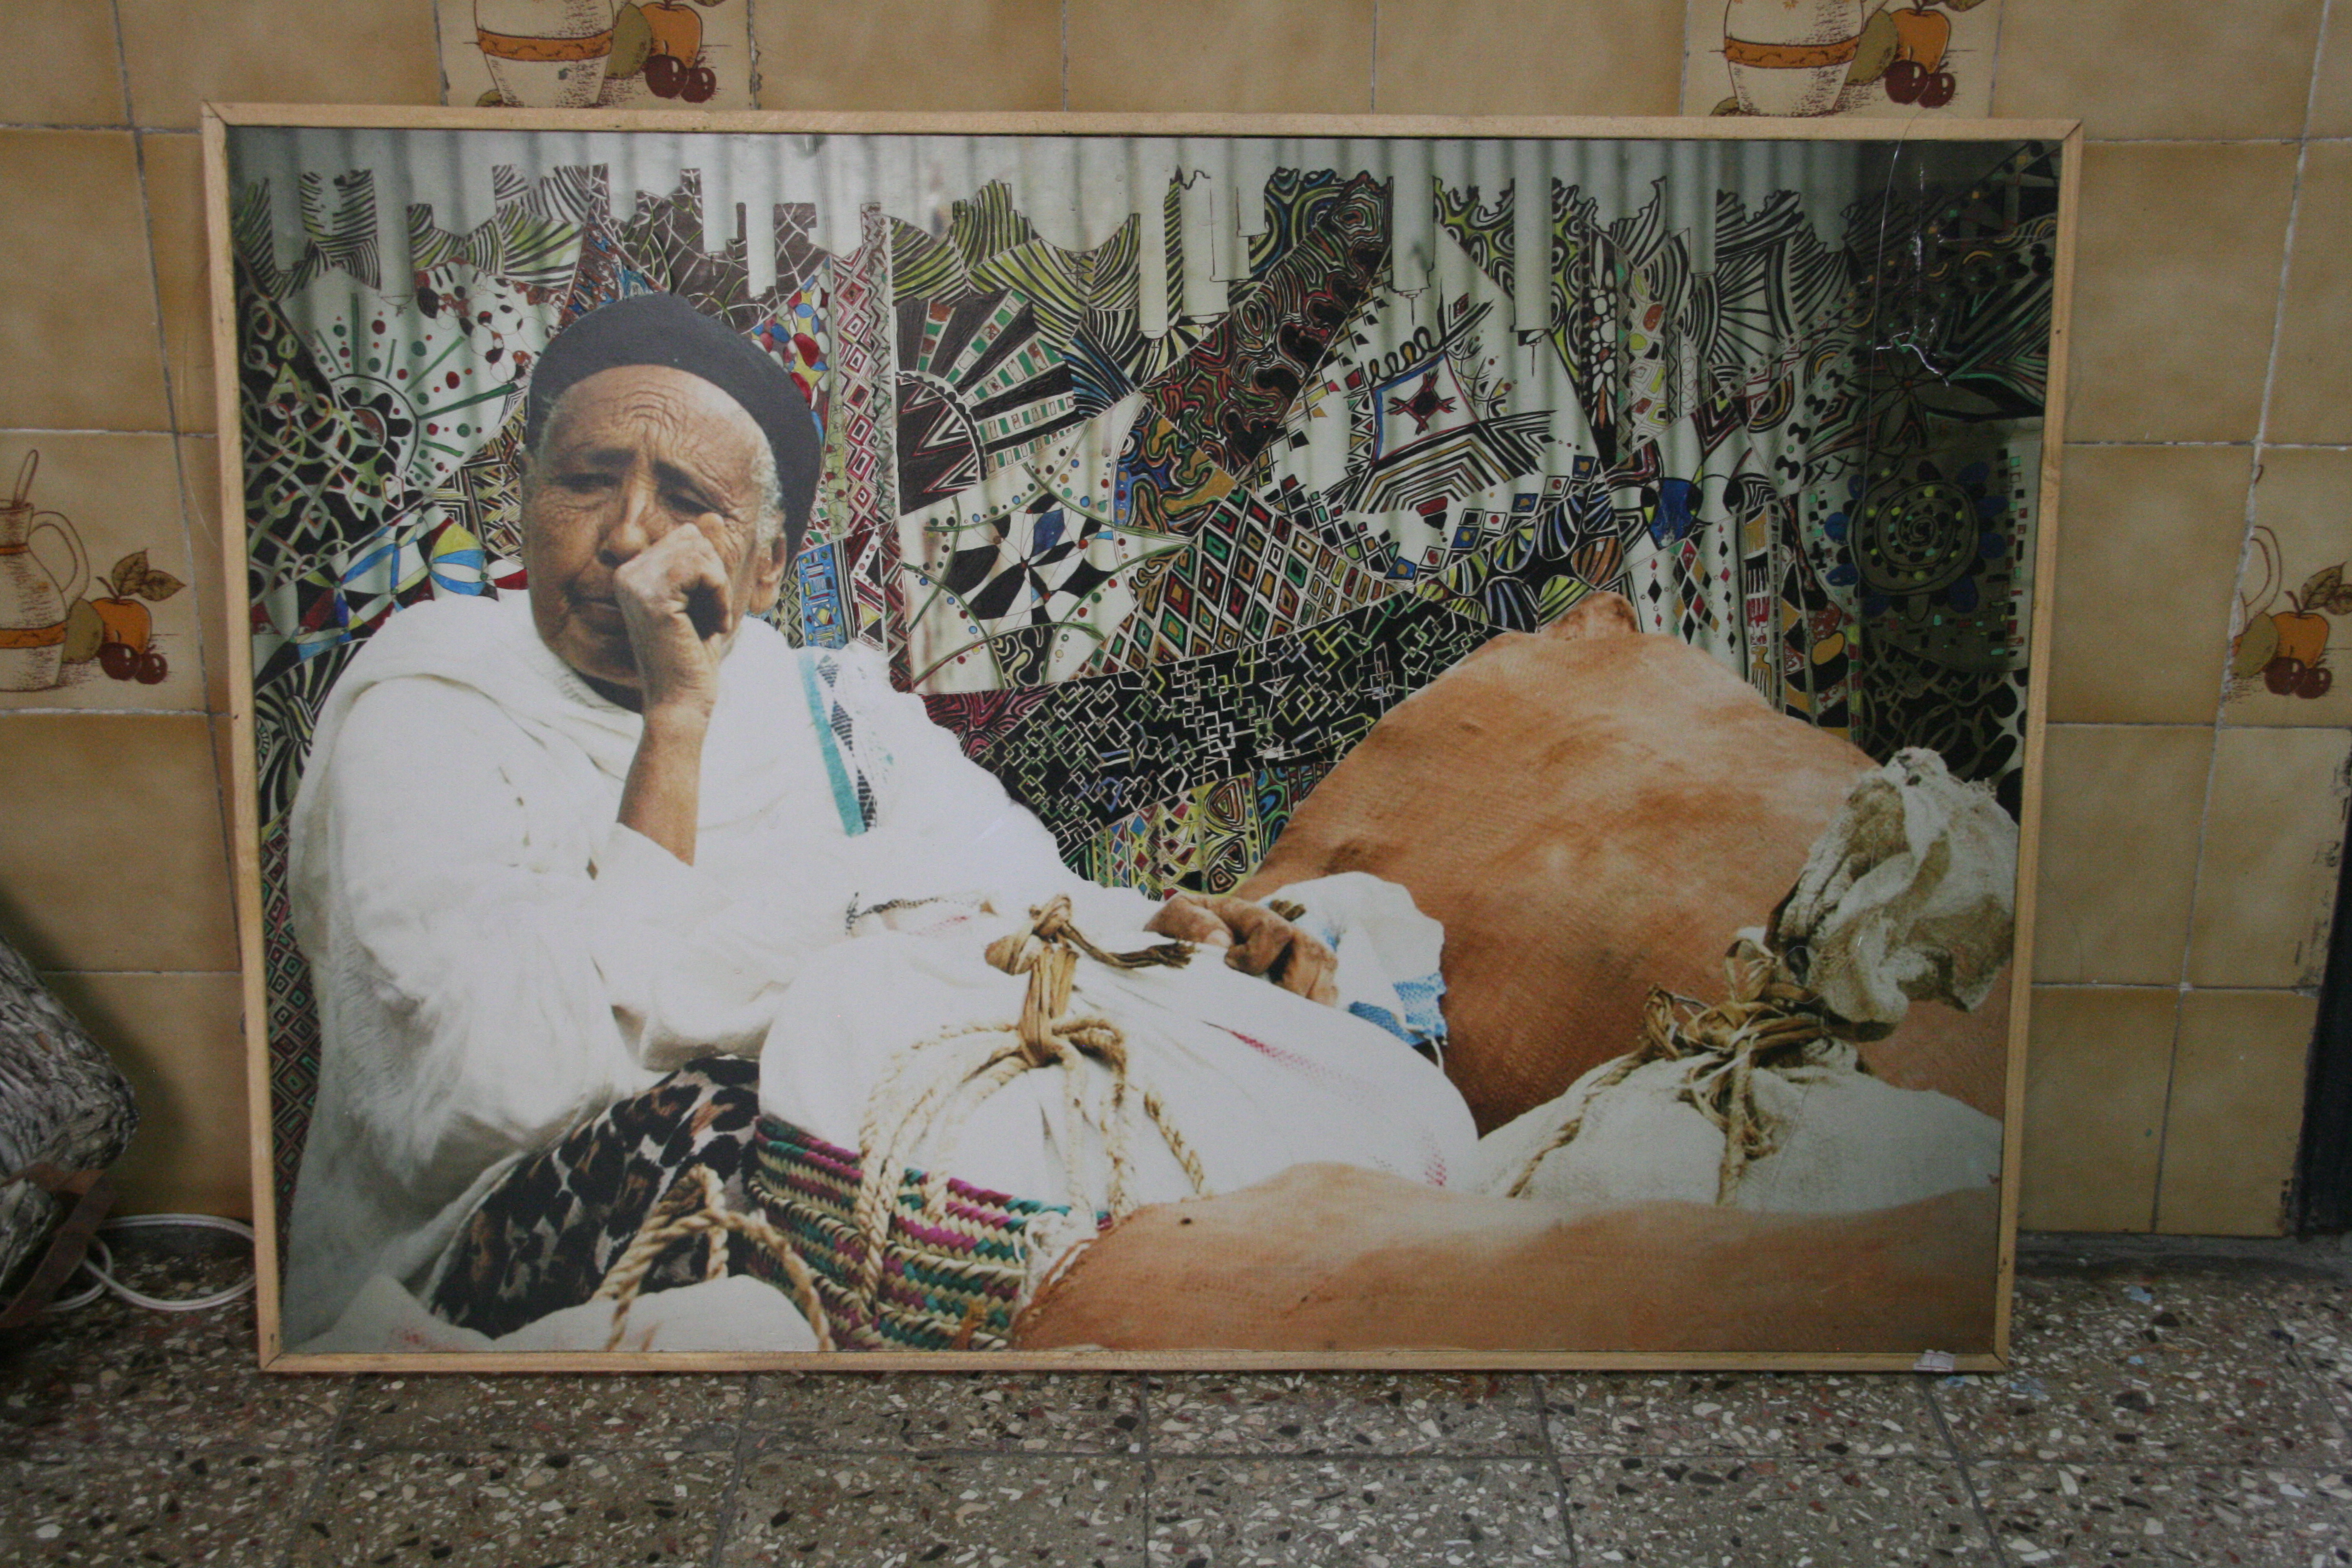 Photograph at Sabegn store Addis Ababa Ethiopia